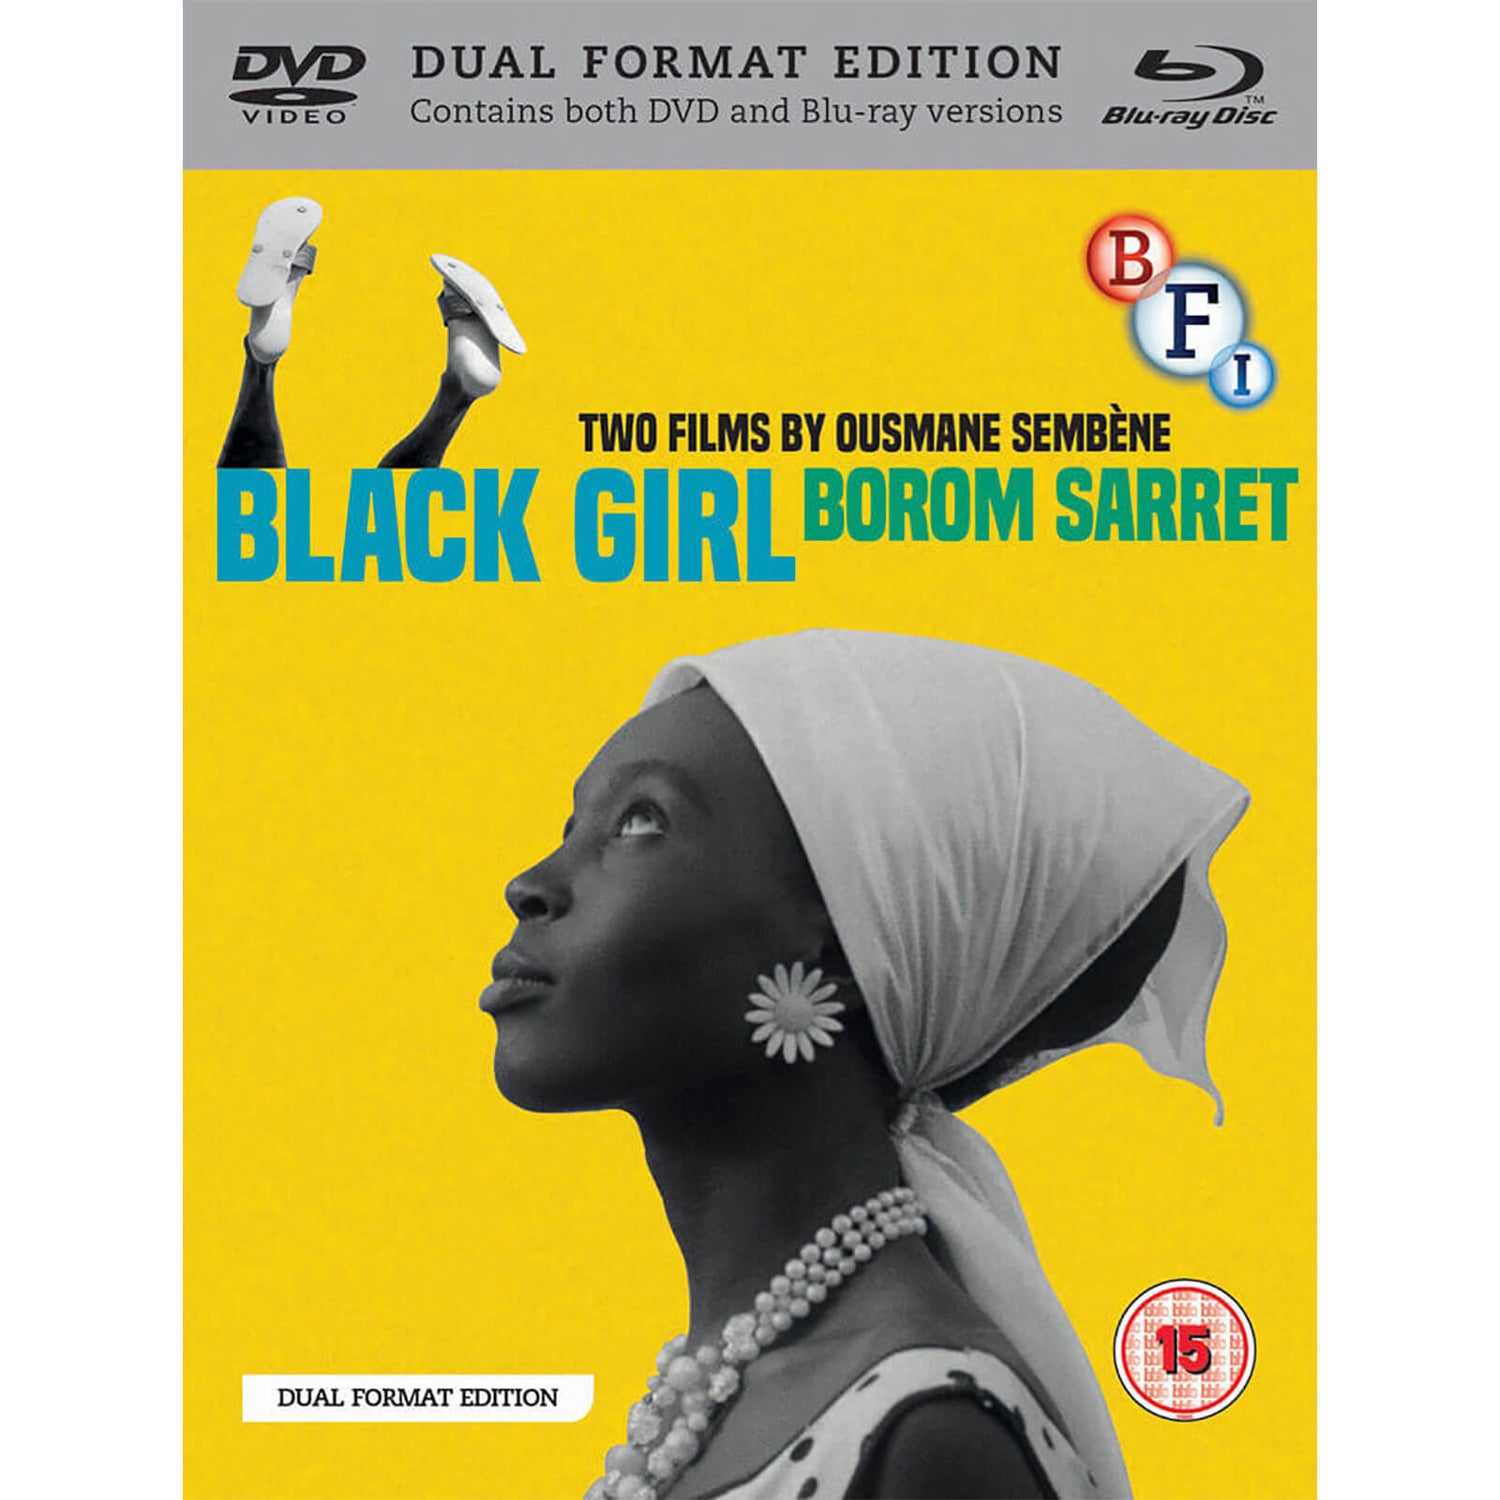 Black Girl / Borom Sarret - Limited Edition (Includes DVD)